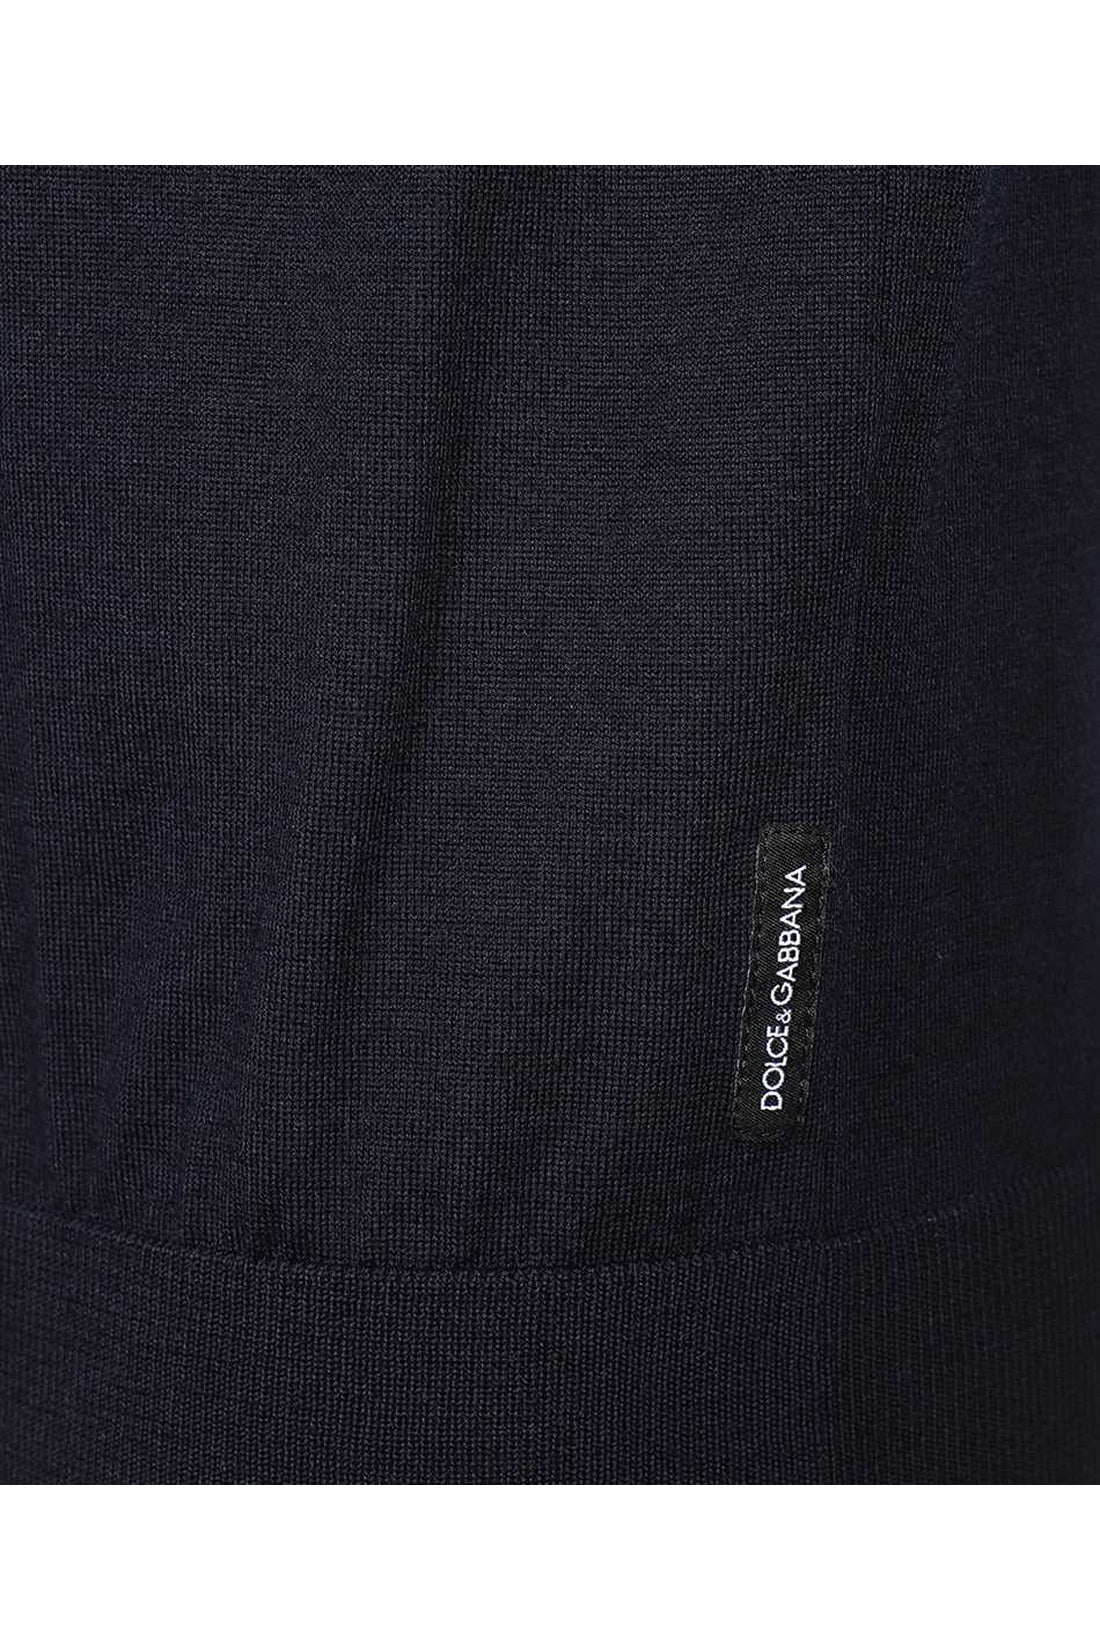 Dolce & Gabbana-OUTLET-SALE-Wool turtleneck sweater-ARCHIVIST